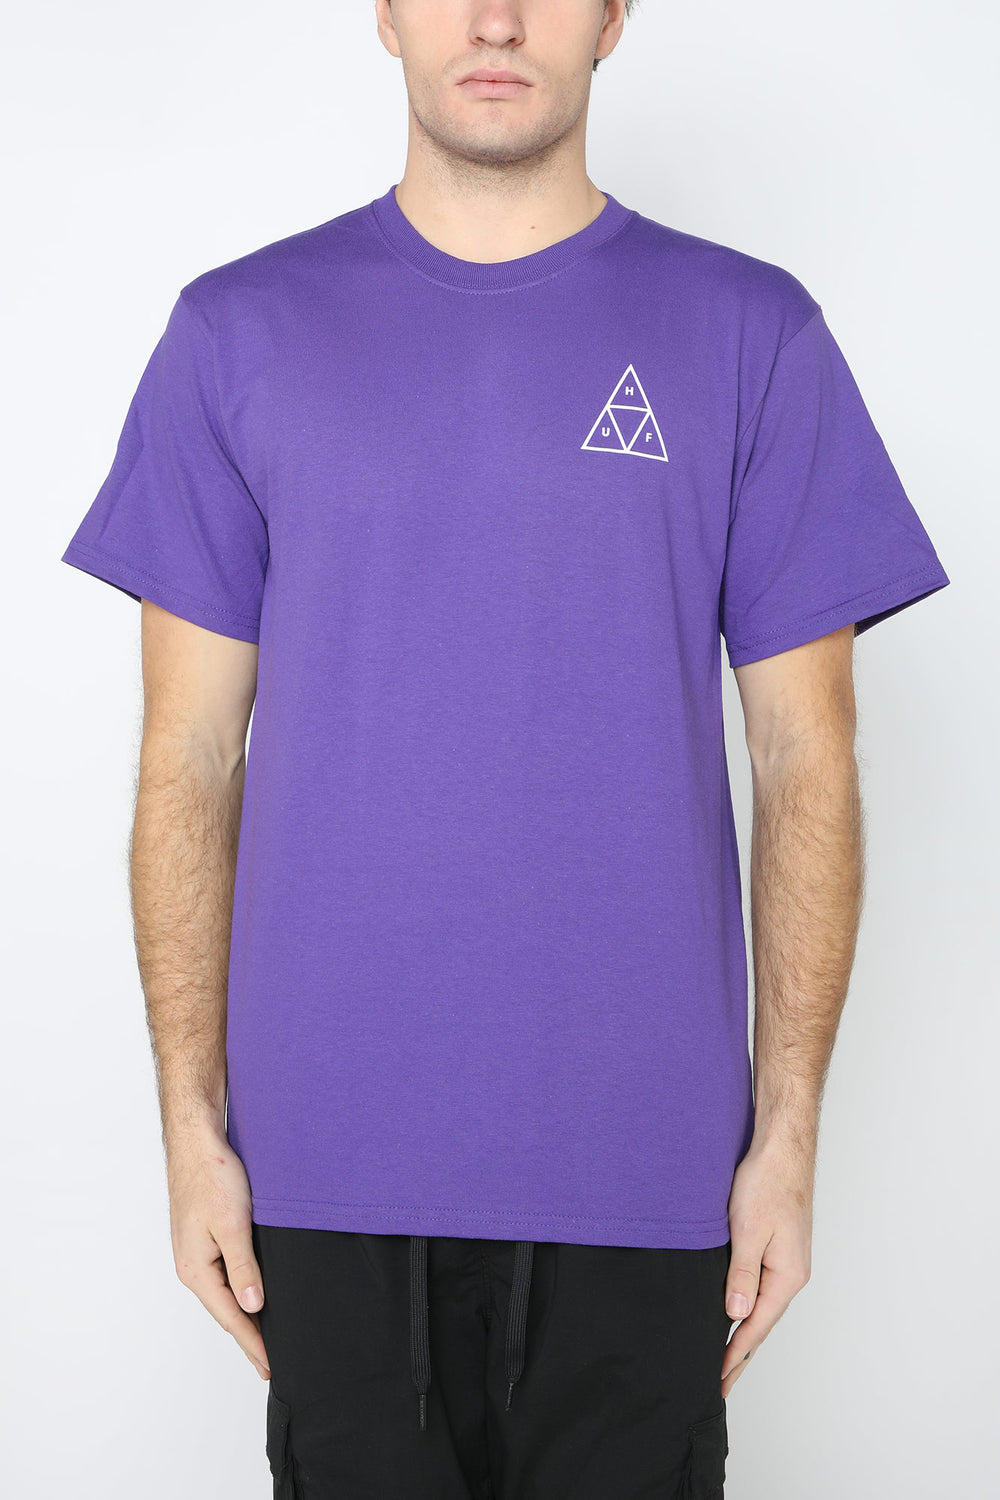 T-Shirt Essentials Triple Triangle HUF Violet